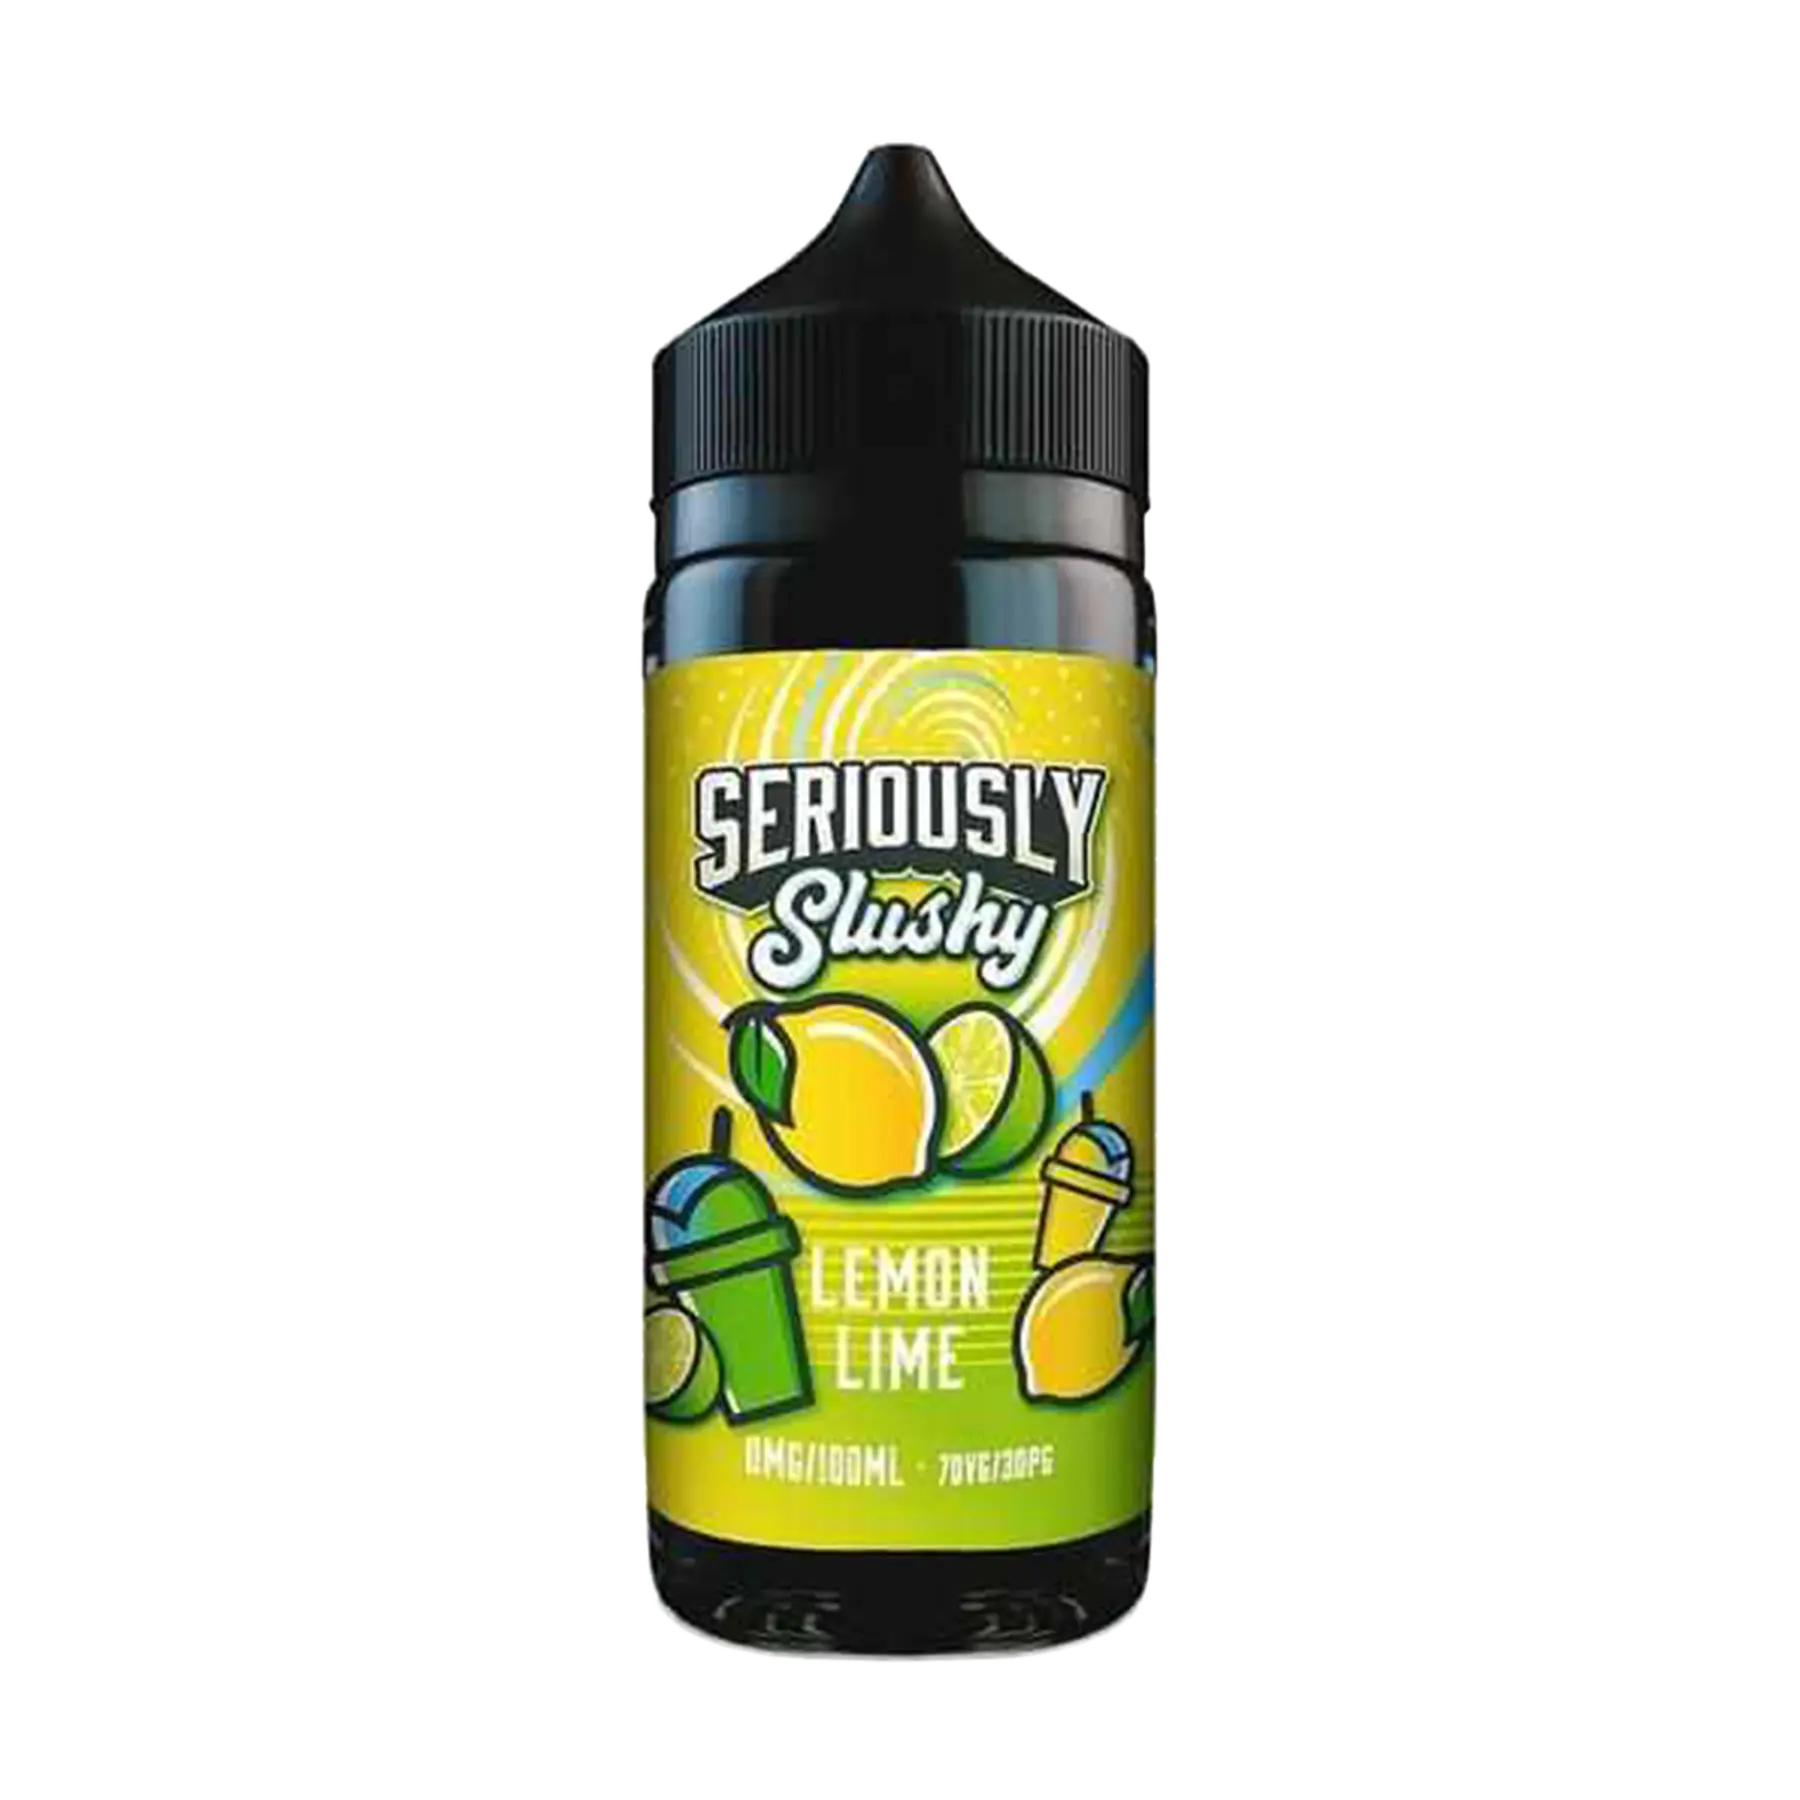 Doozy Seriously Slushy Lemon Lime 100ml E Liquid Shortfill